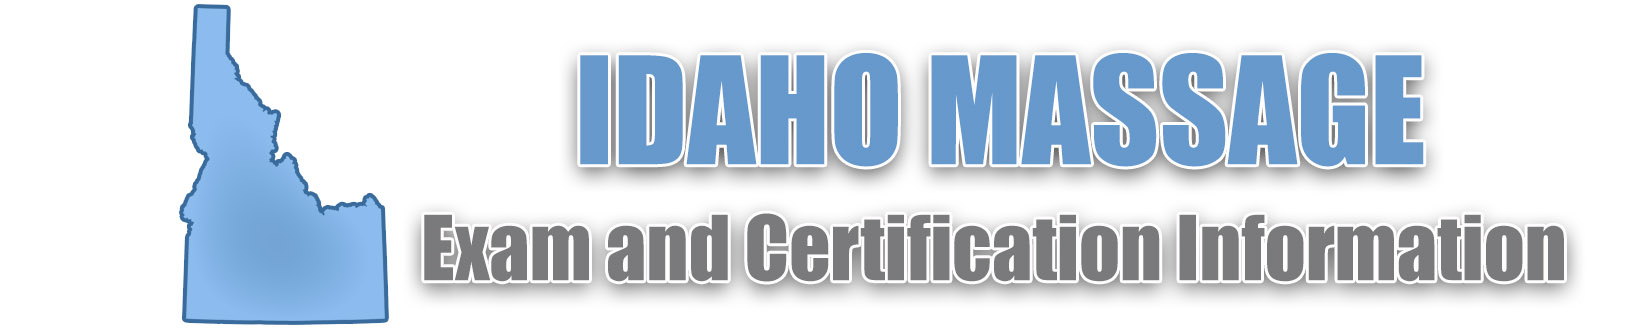 Idaho MBLEX Massage Exam and Certification Information